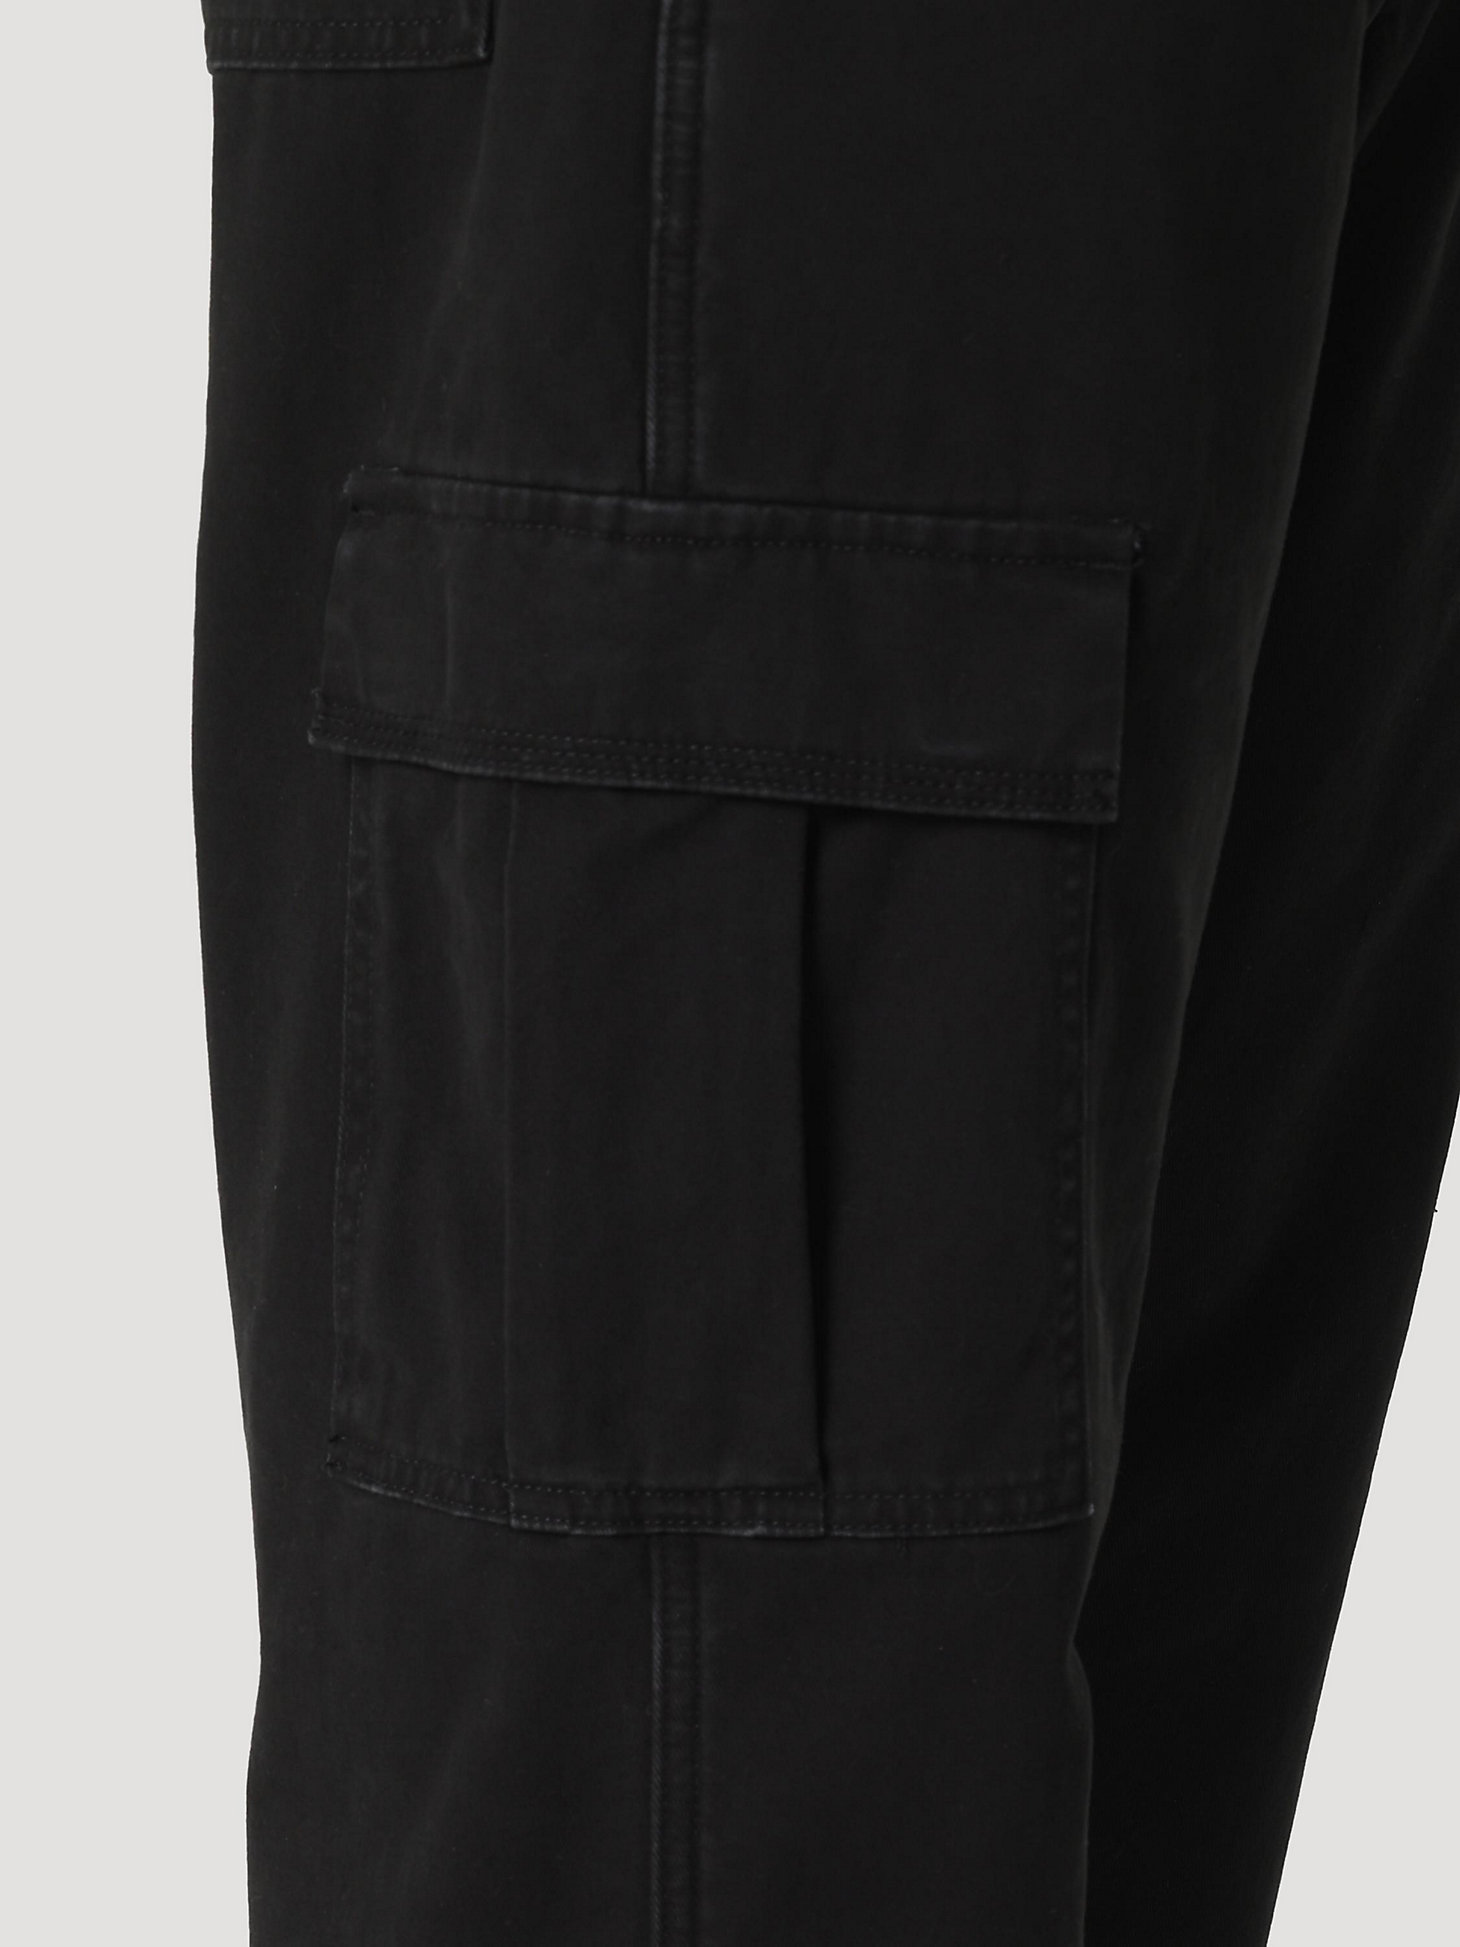 Men's Fleece Lined Cargo Pant in Black alternative view 7